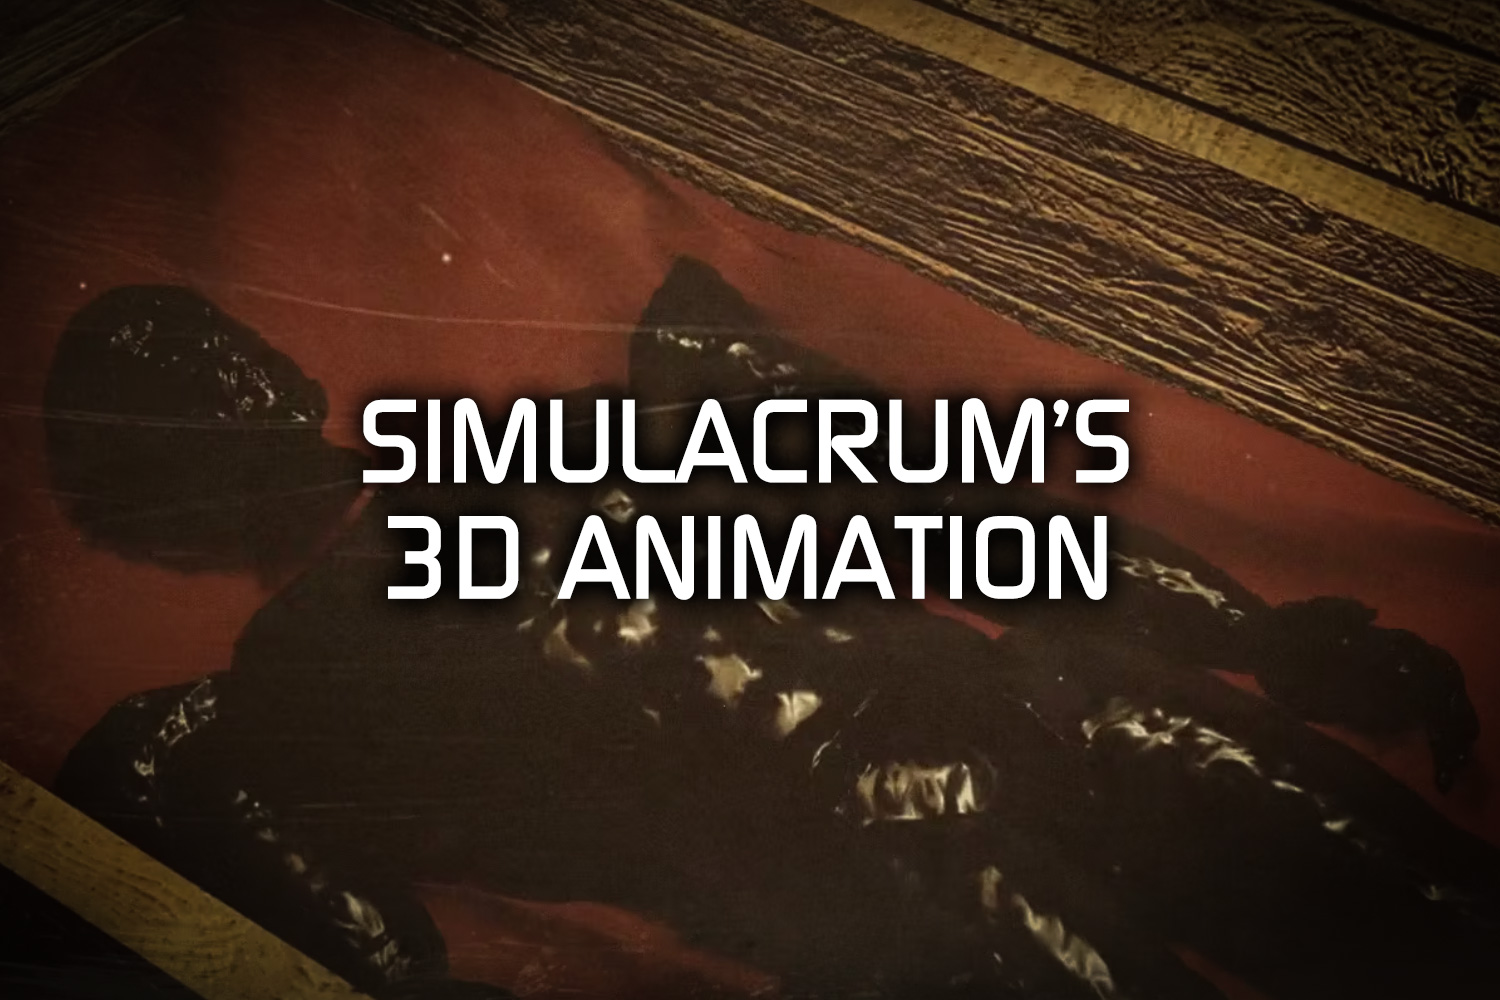 3D ANIMATION: THE SIMULACRUM